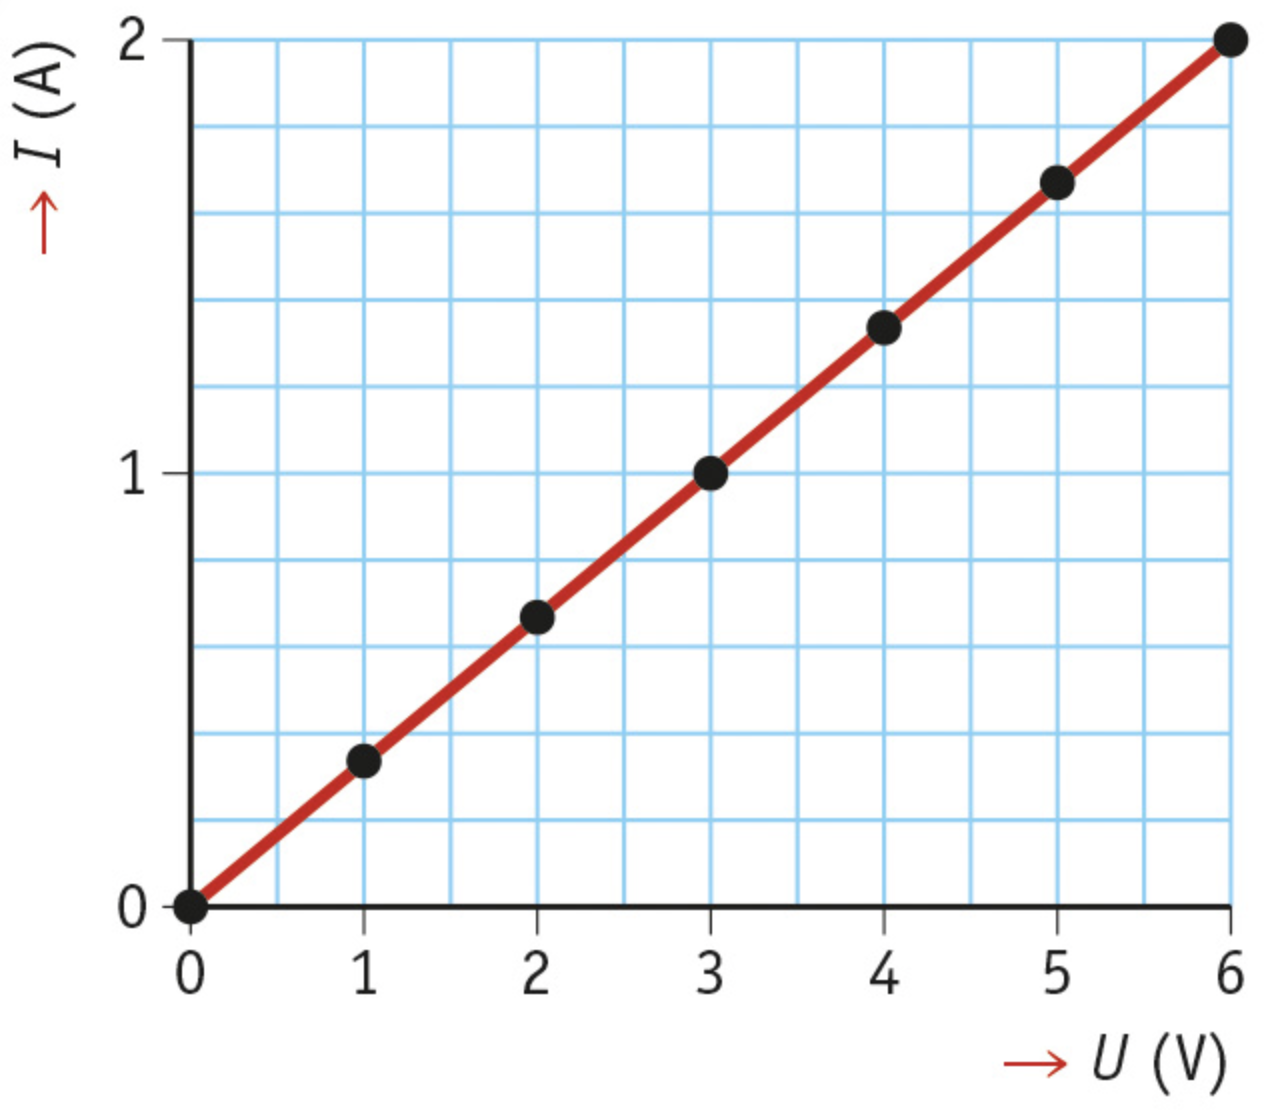 The (I,U) diagram of a constantan wire